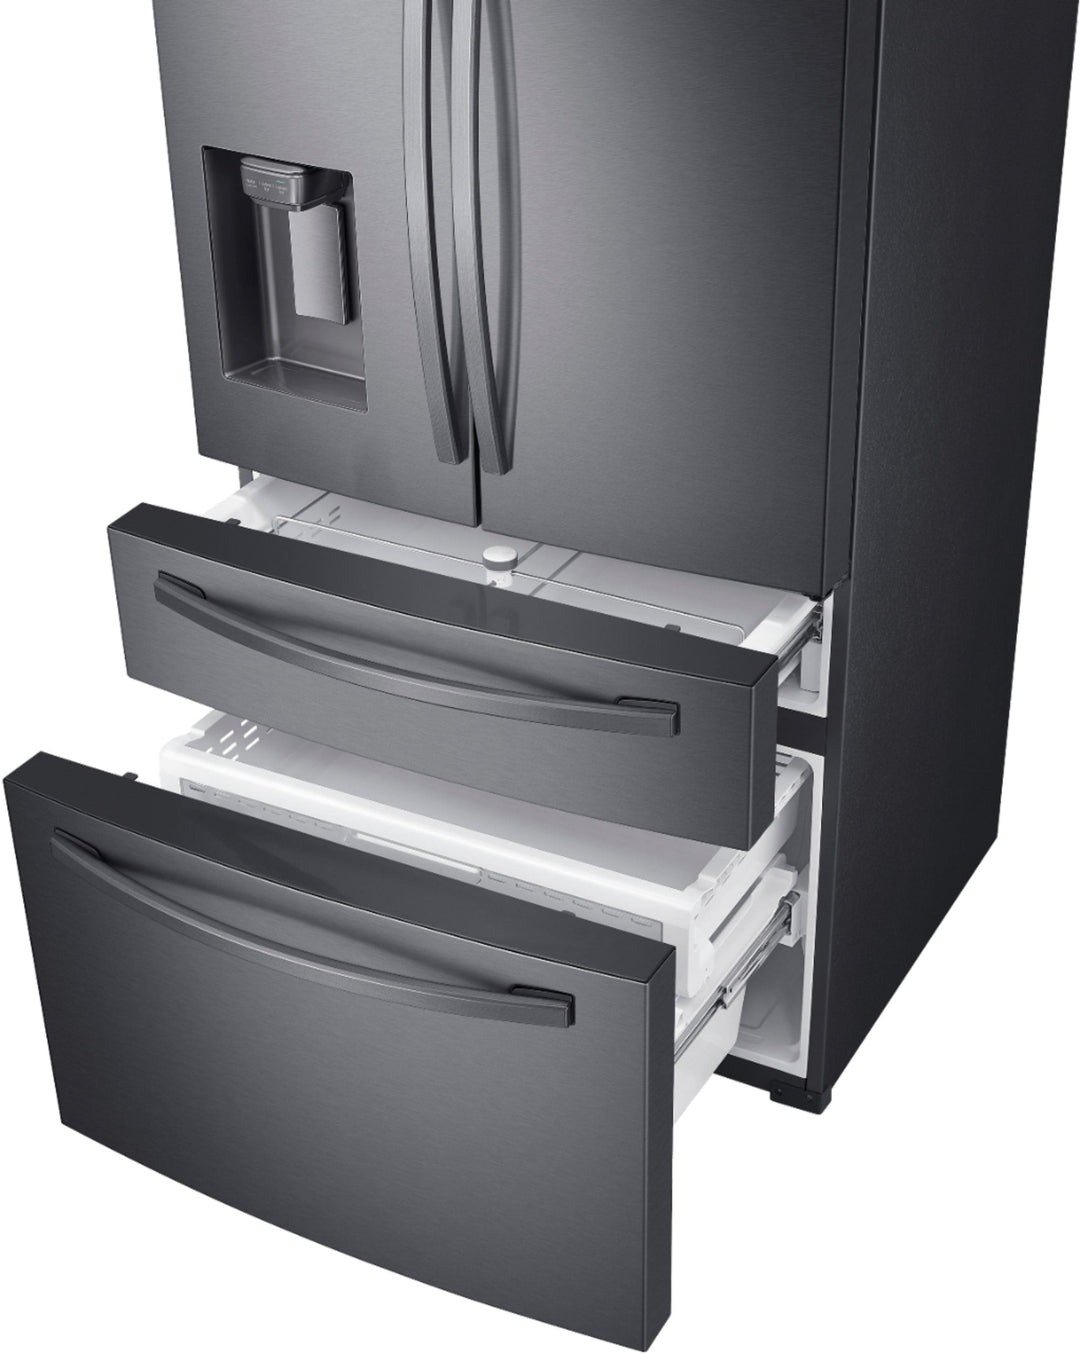 Samsung - 22.6 cu. ft. 4-Door French Door Counter Depth Refrigerator with FlexZone™ Drawer - Black stainless steel_6